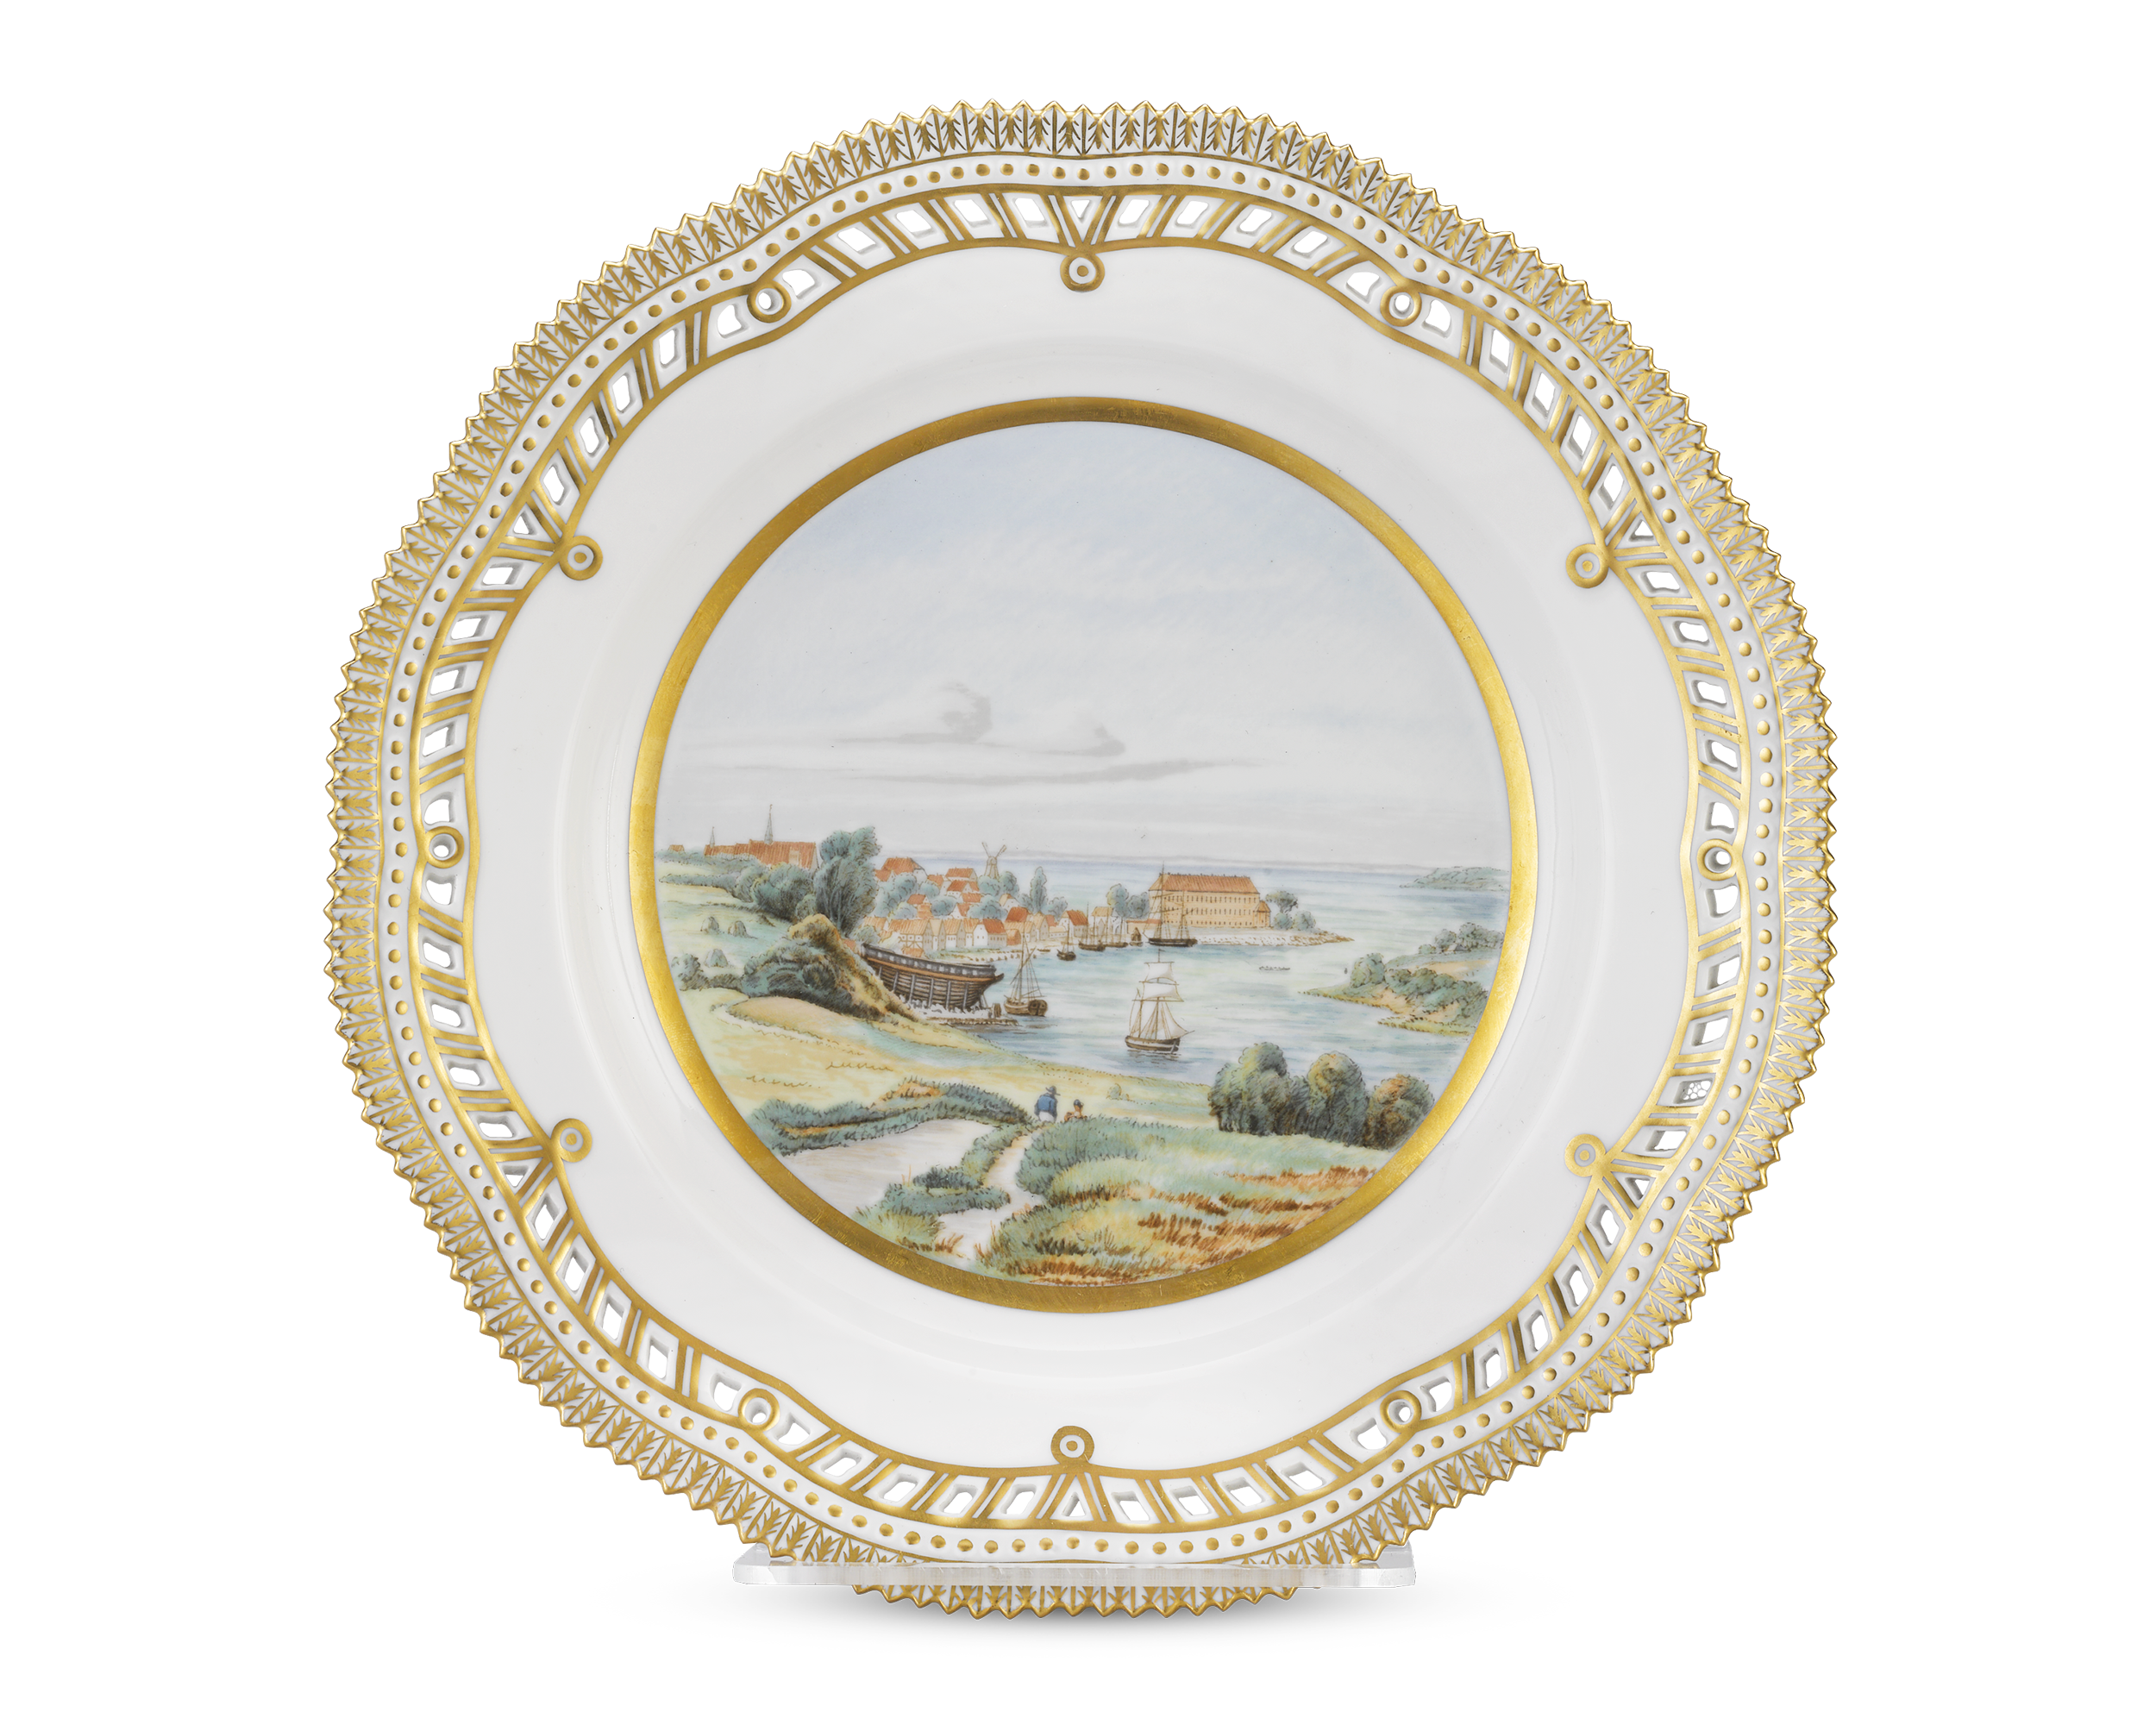 Sonderborg Castle Porcelain Plate by Royal Copenhagen